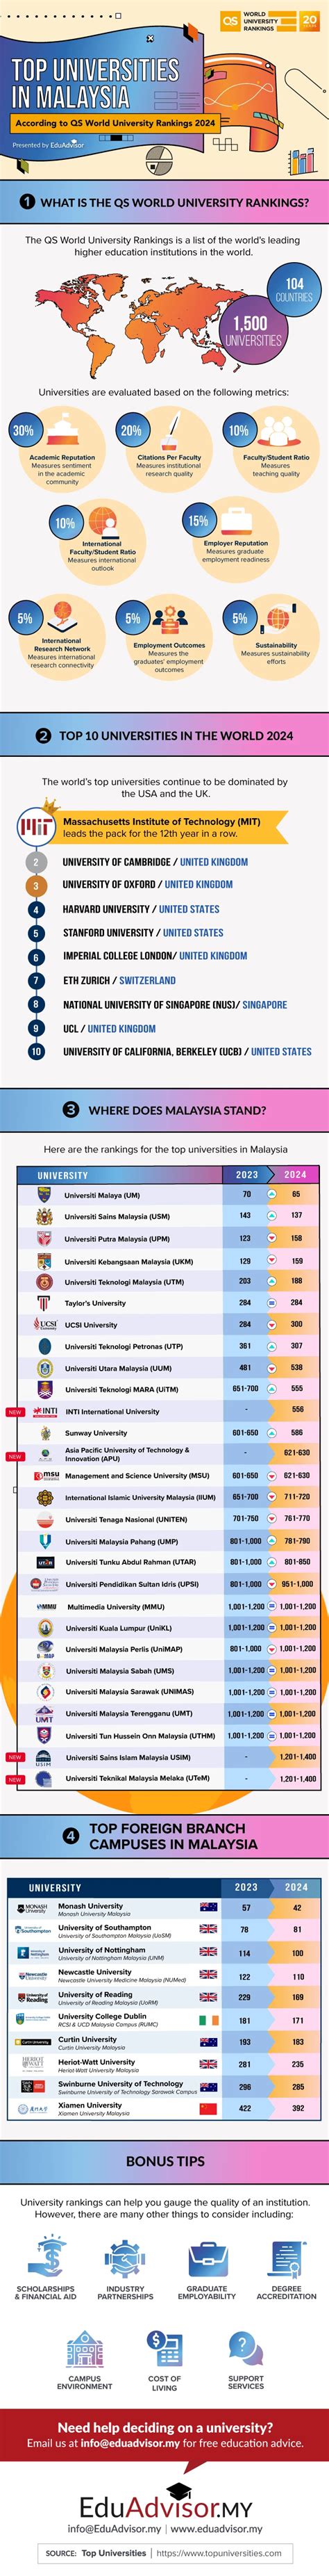 Qs World University Rankings